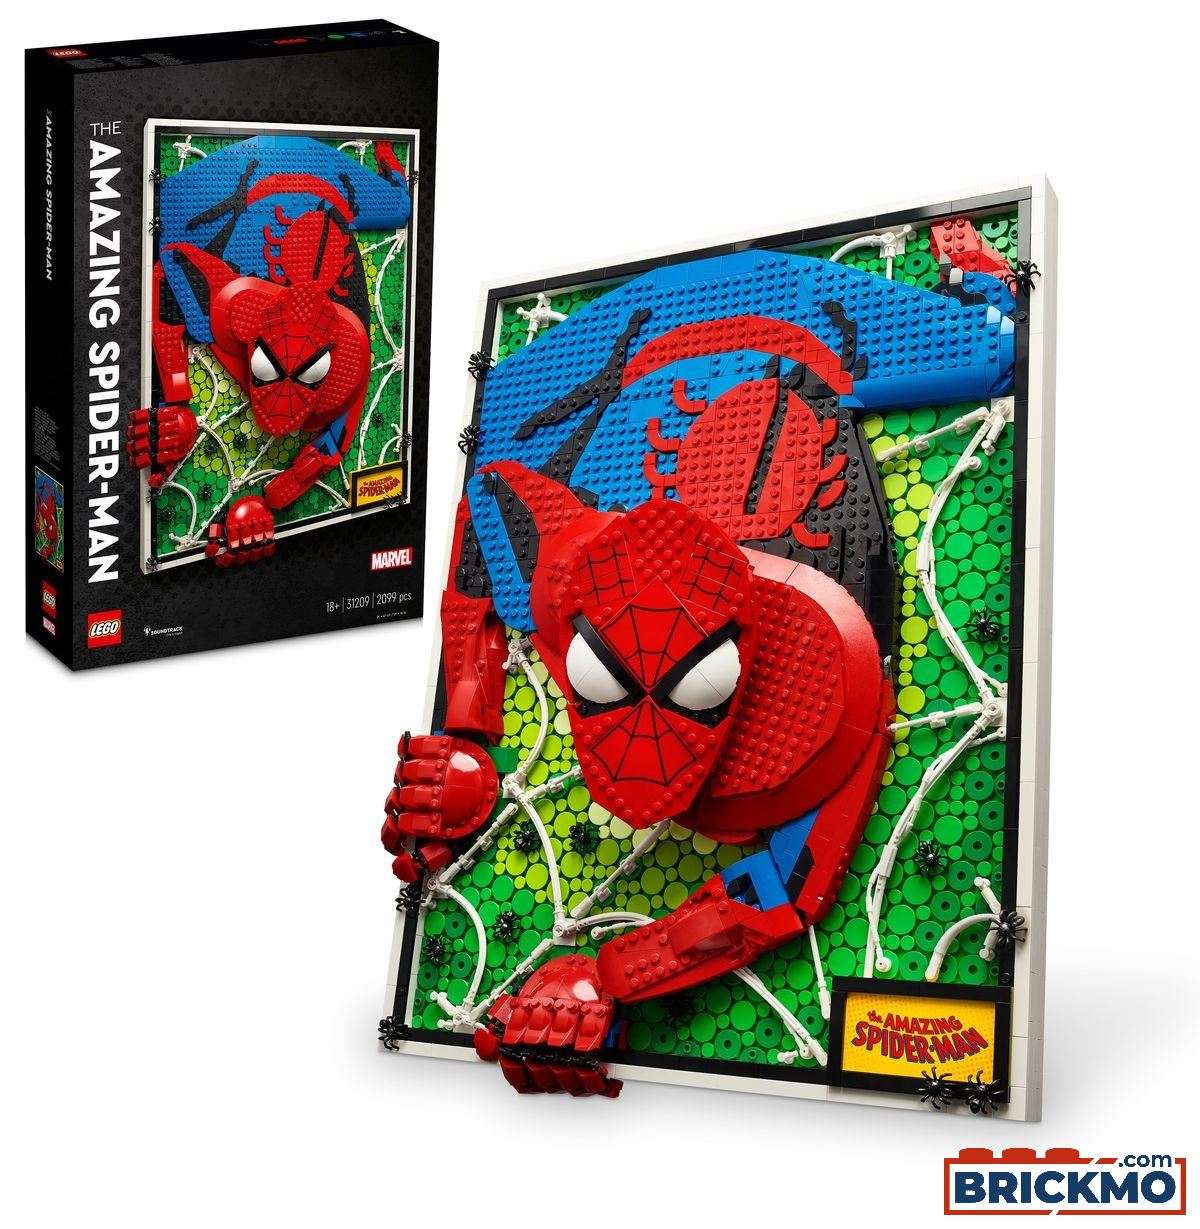 LEGO ART 31209 O Fantástico Spider-Man 31209